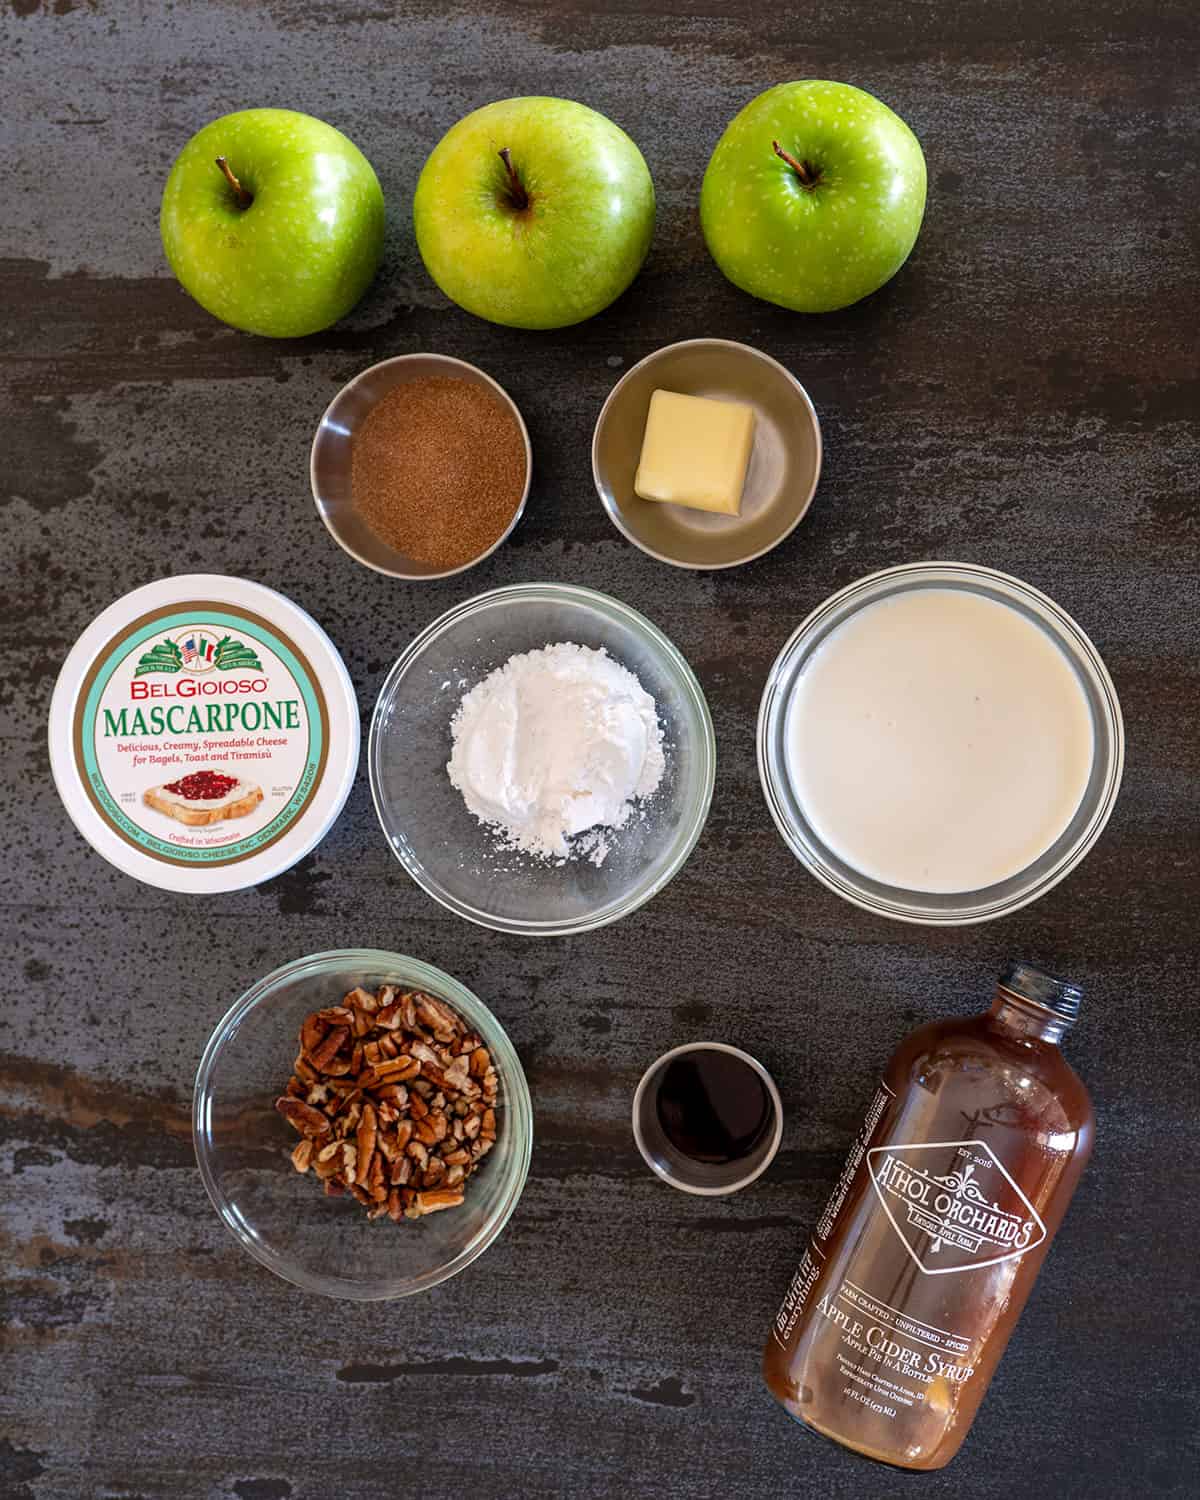 caramel apple cheesecake stack ingredients: apples, cinnamon sugar, butter, mascarpone, powdered sugar, cream, pecans, vanilla, apple cider syrup.